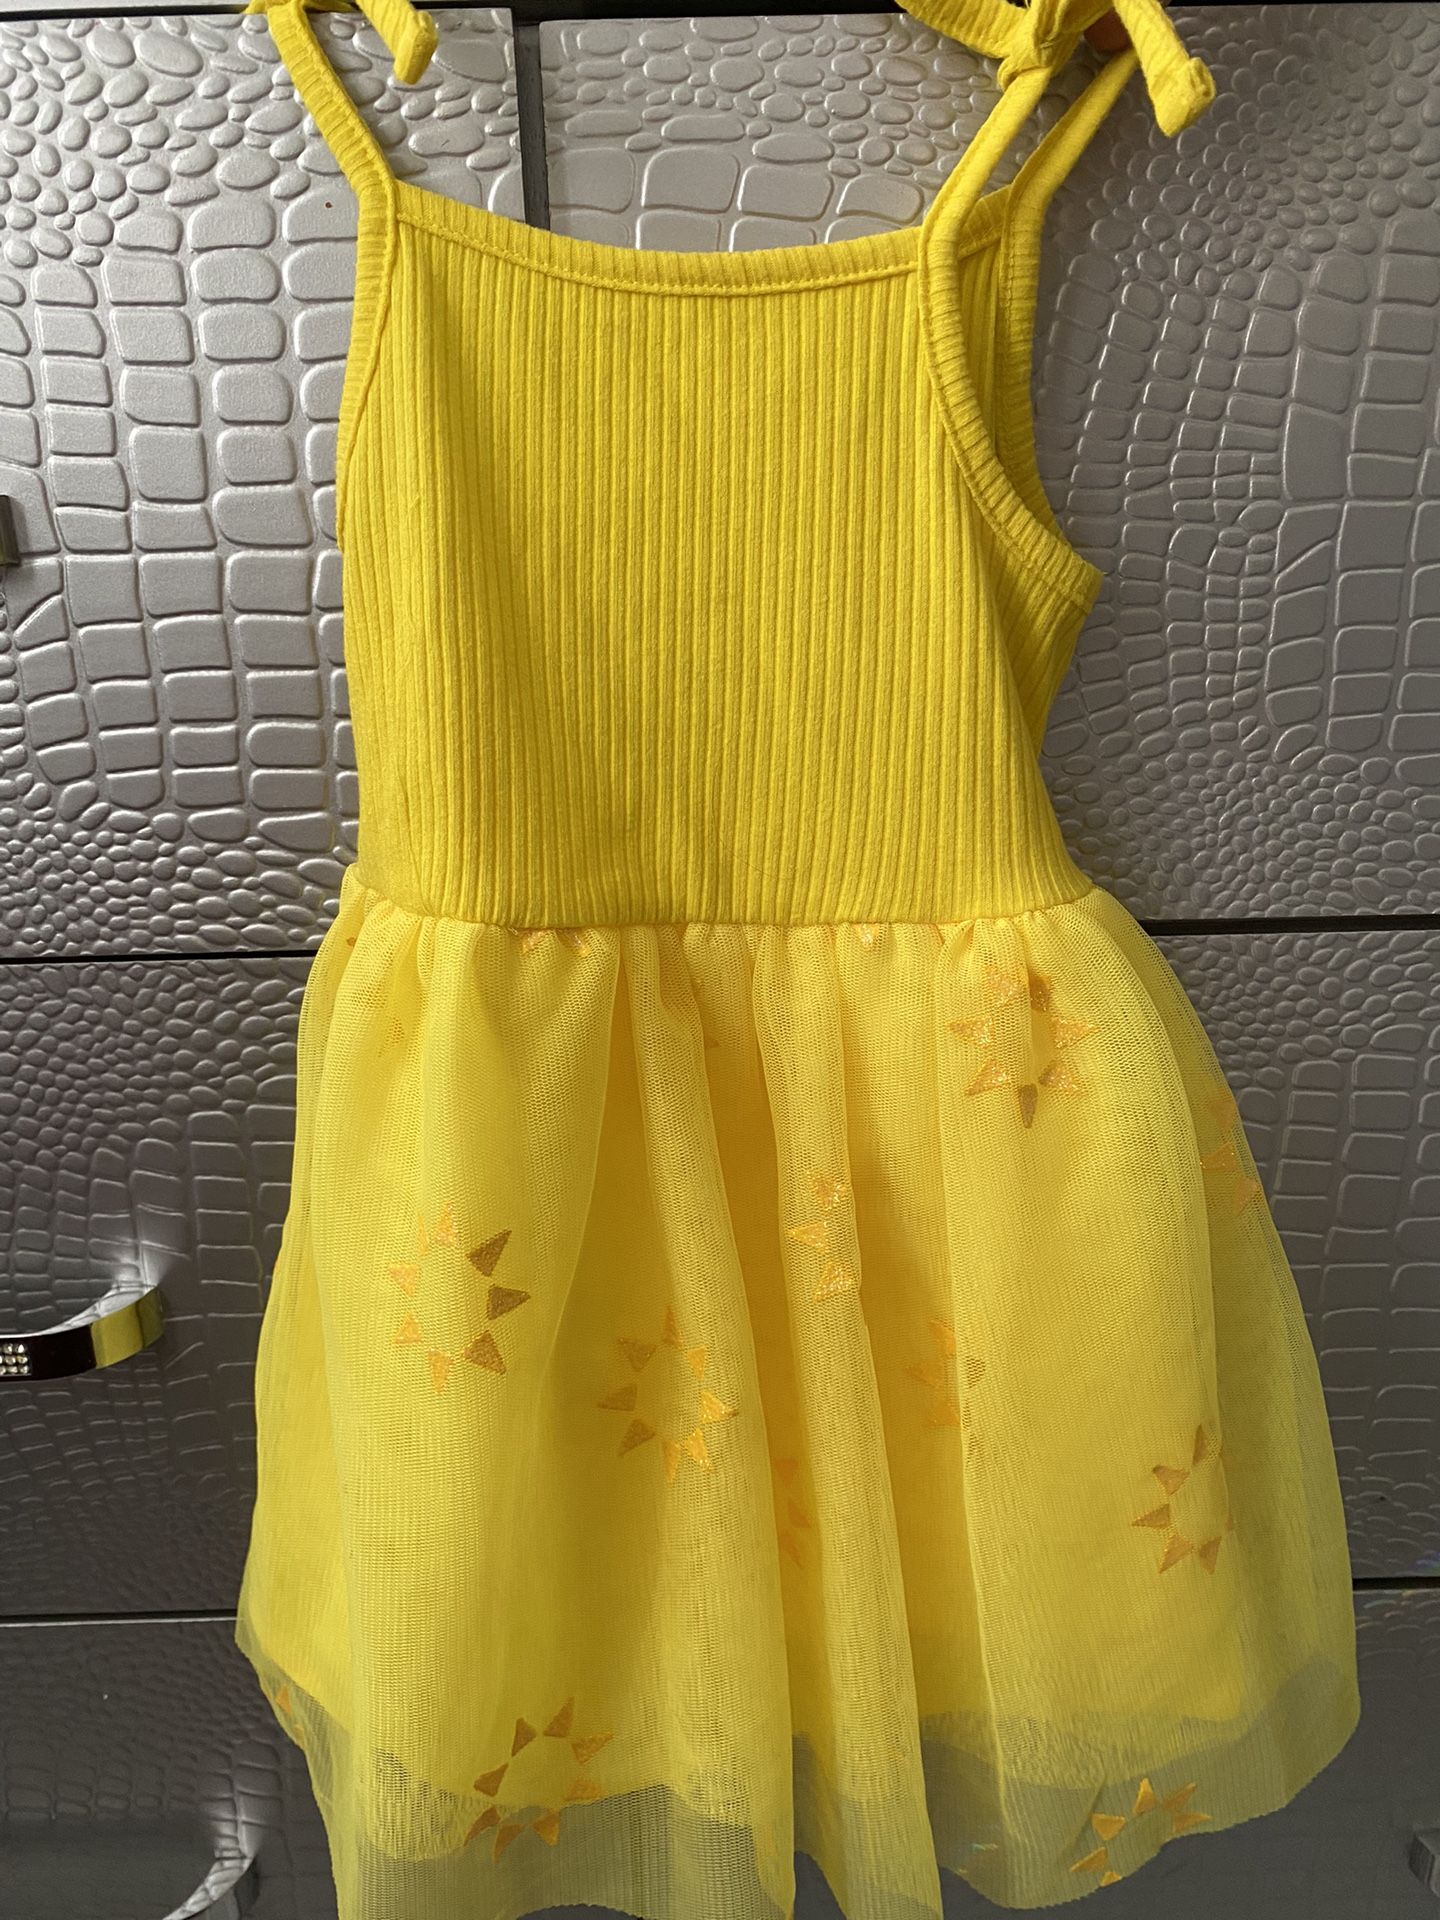 Yellow Sun Dress 12-18 Months Old 